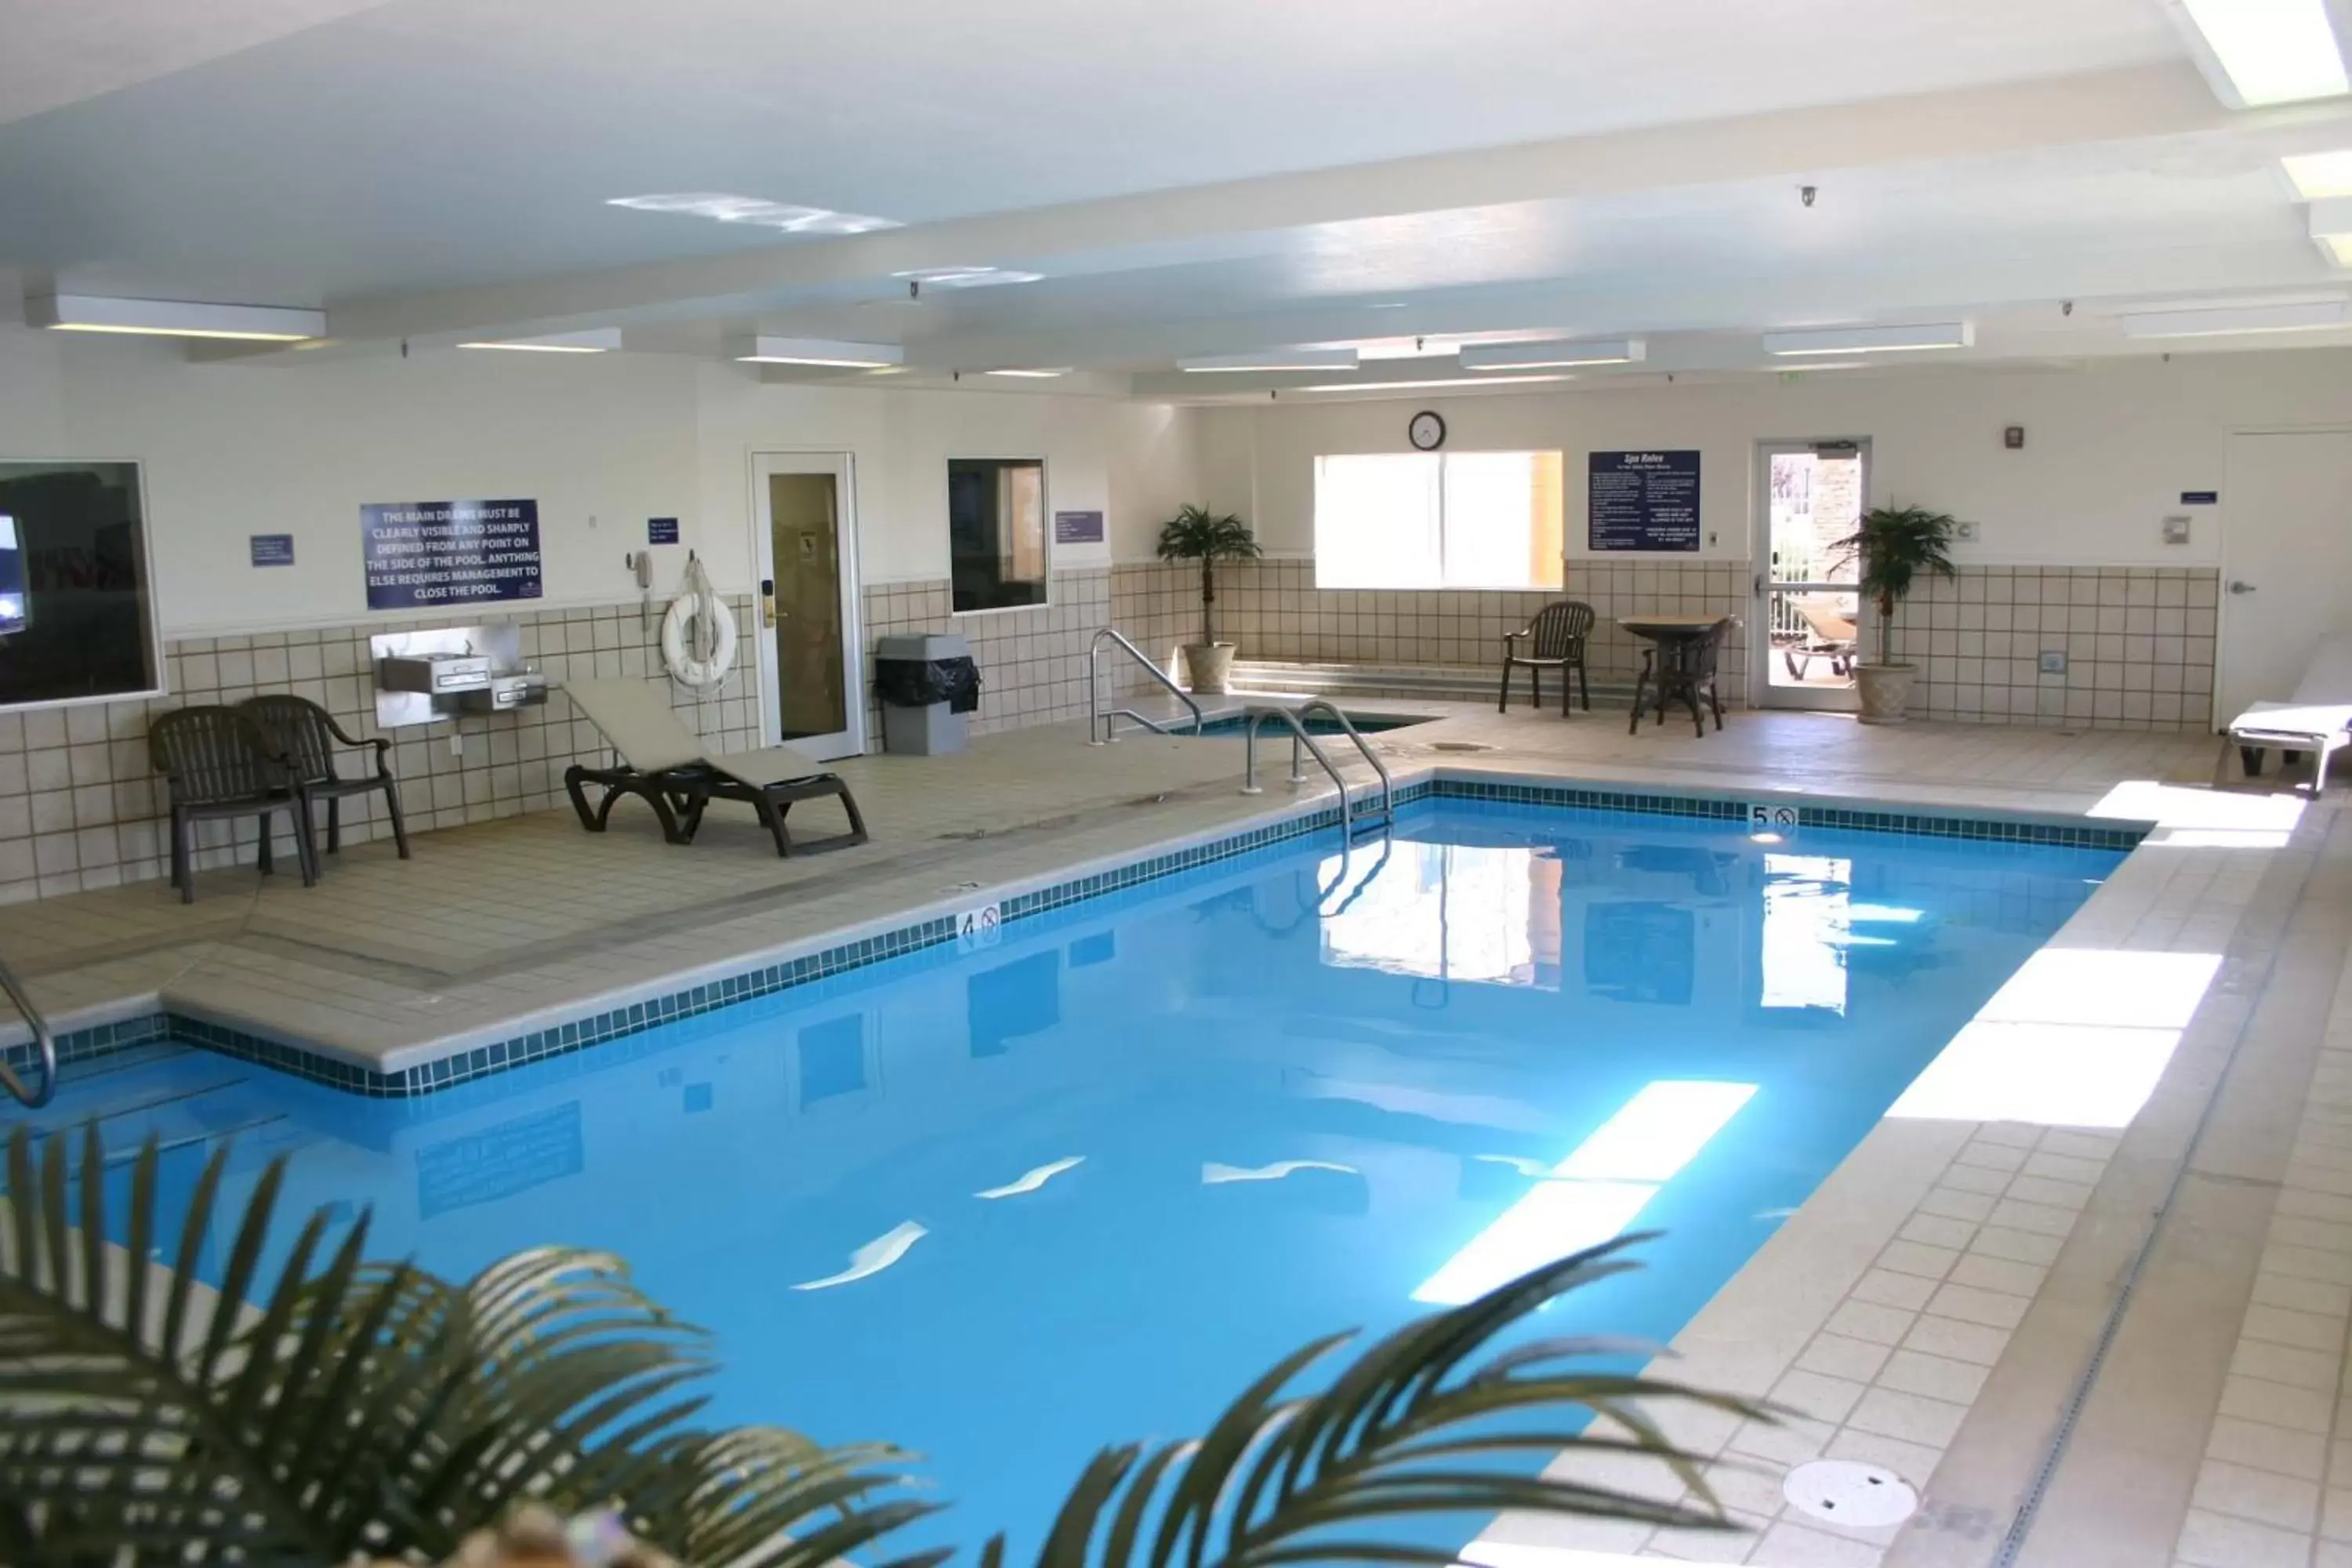 Swimming Pool in Crystal Inn Hotel & Suites - Great Falls